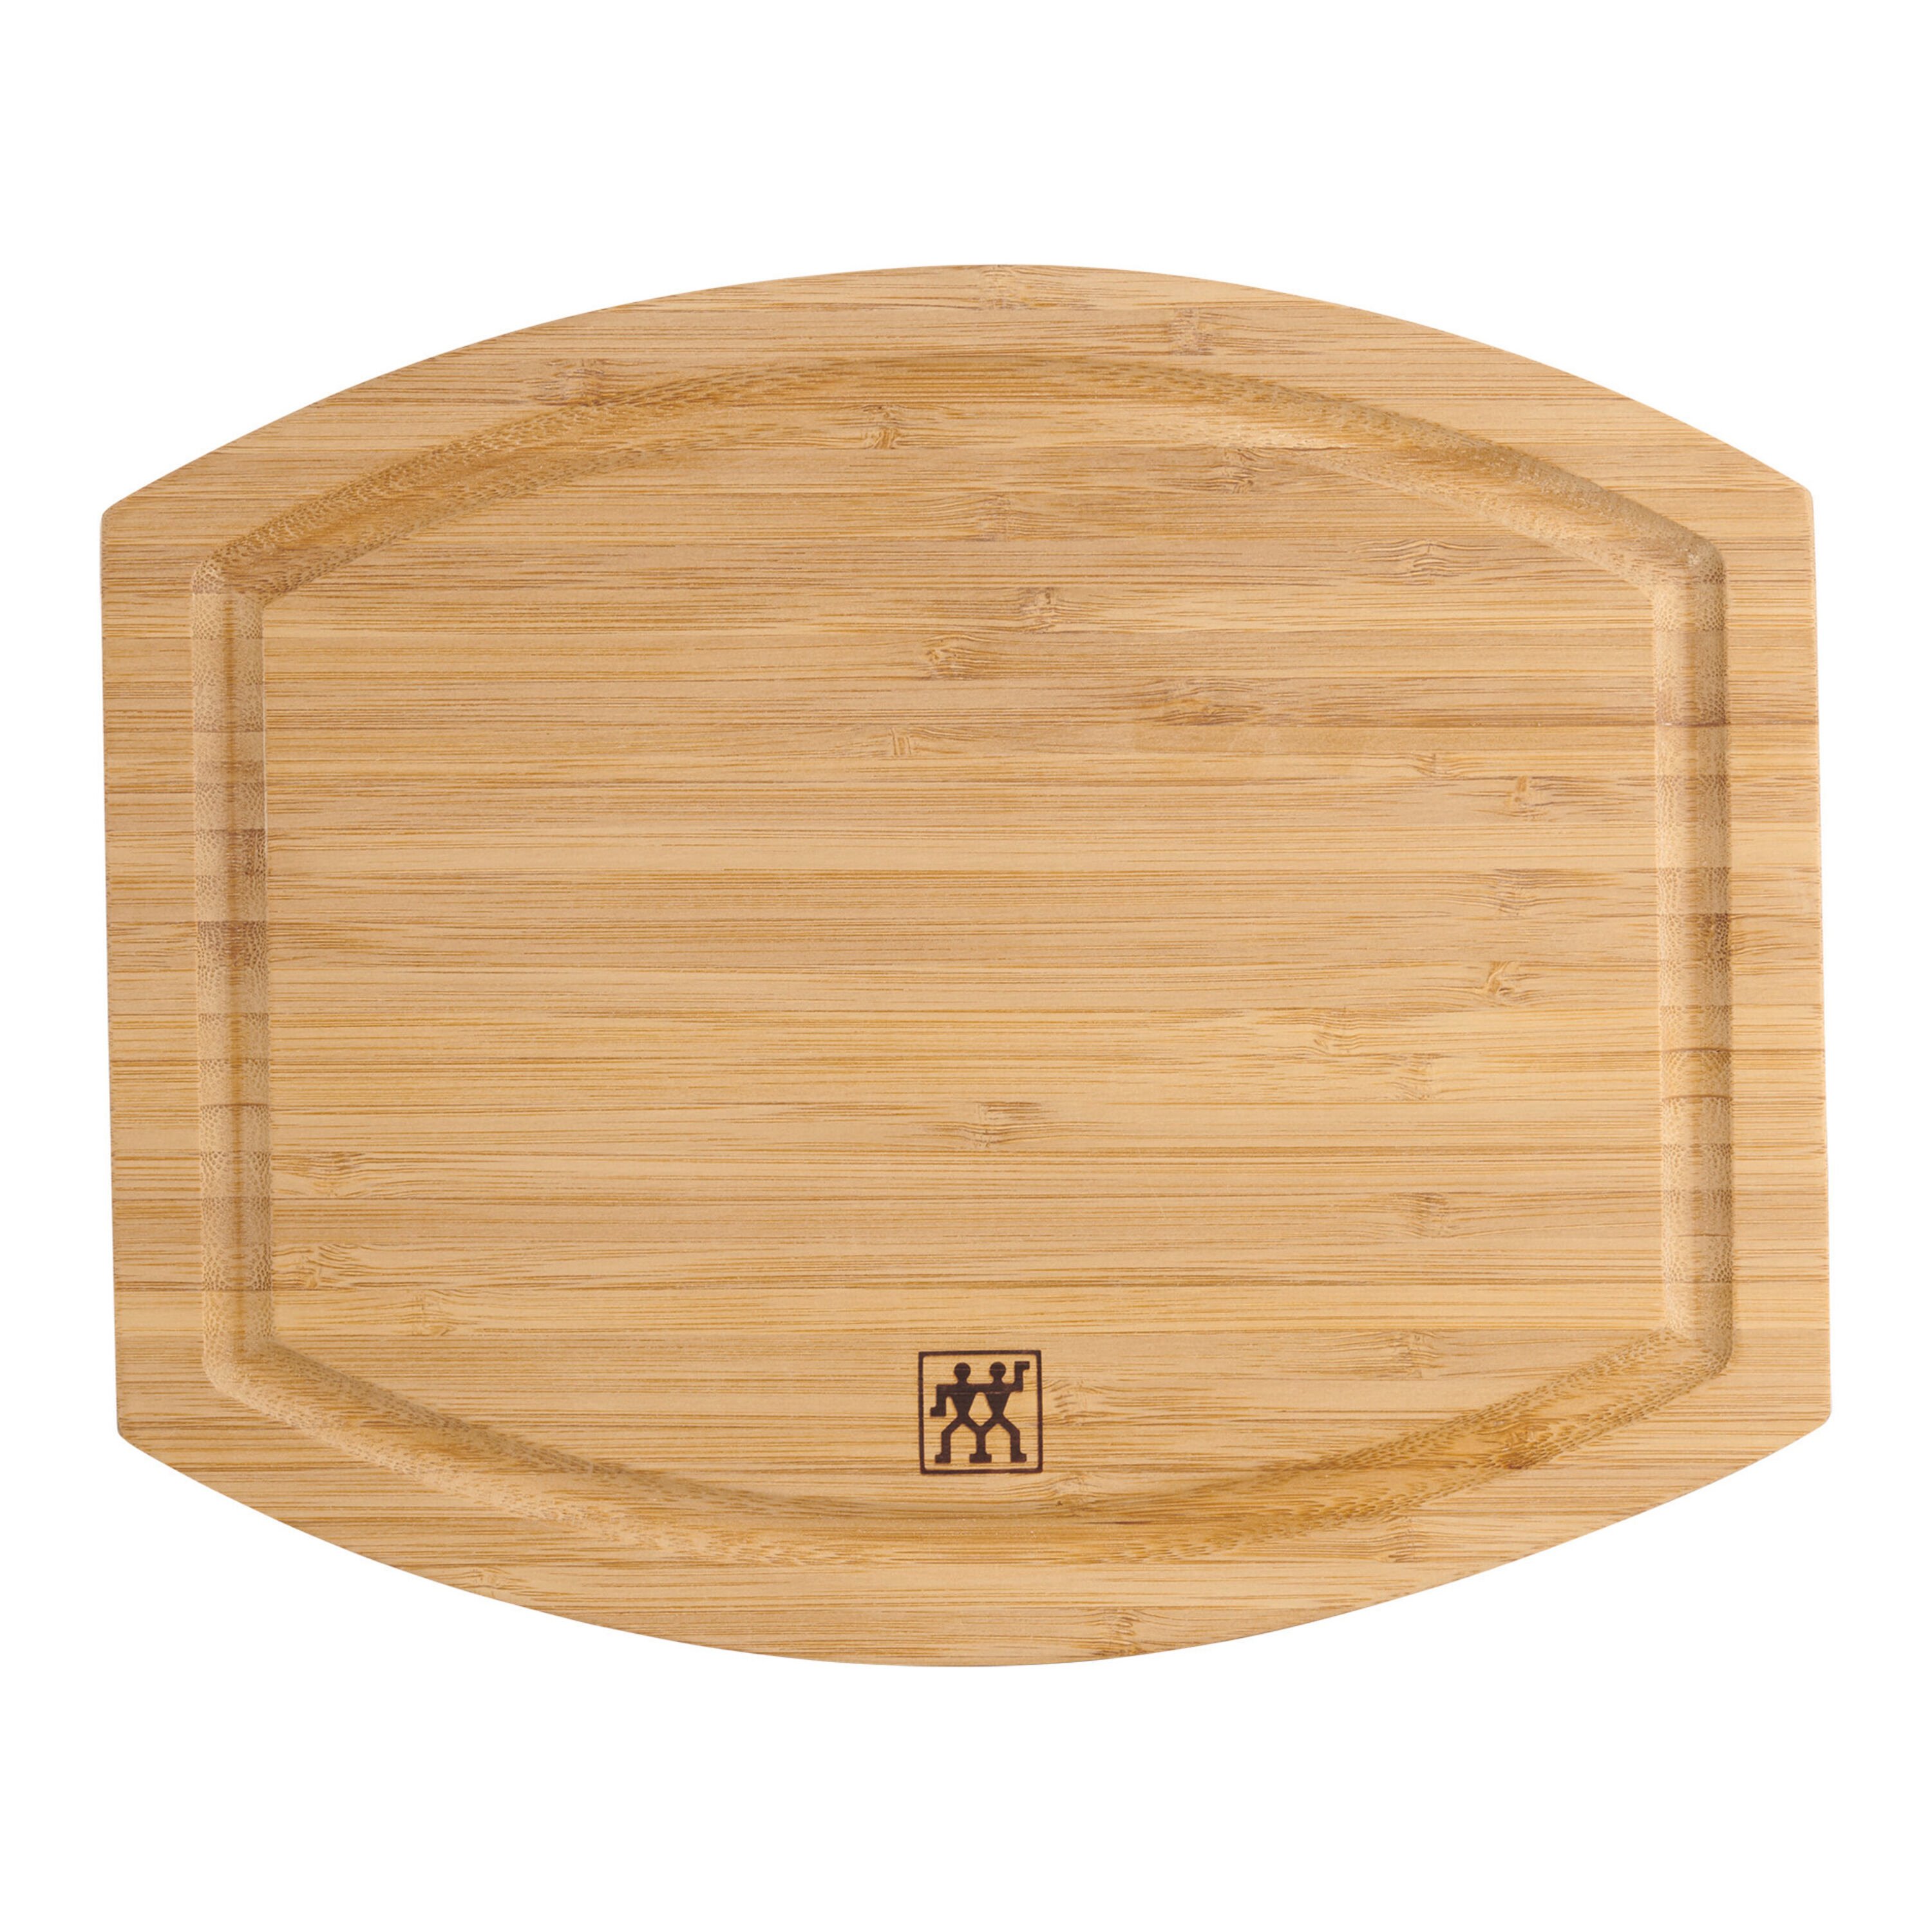 Zwilling cutting board walnut wood - 35x25 cm - ZW35123-100